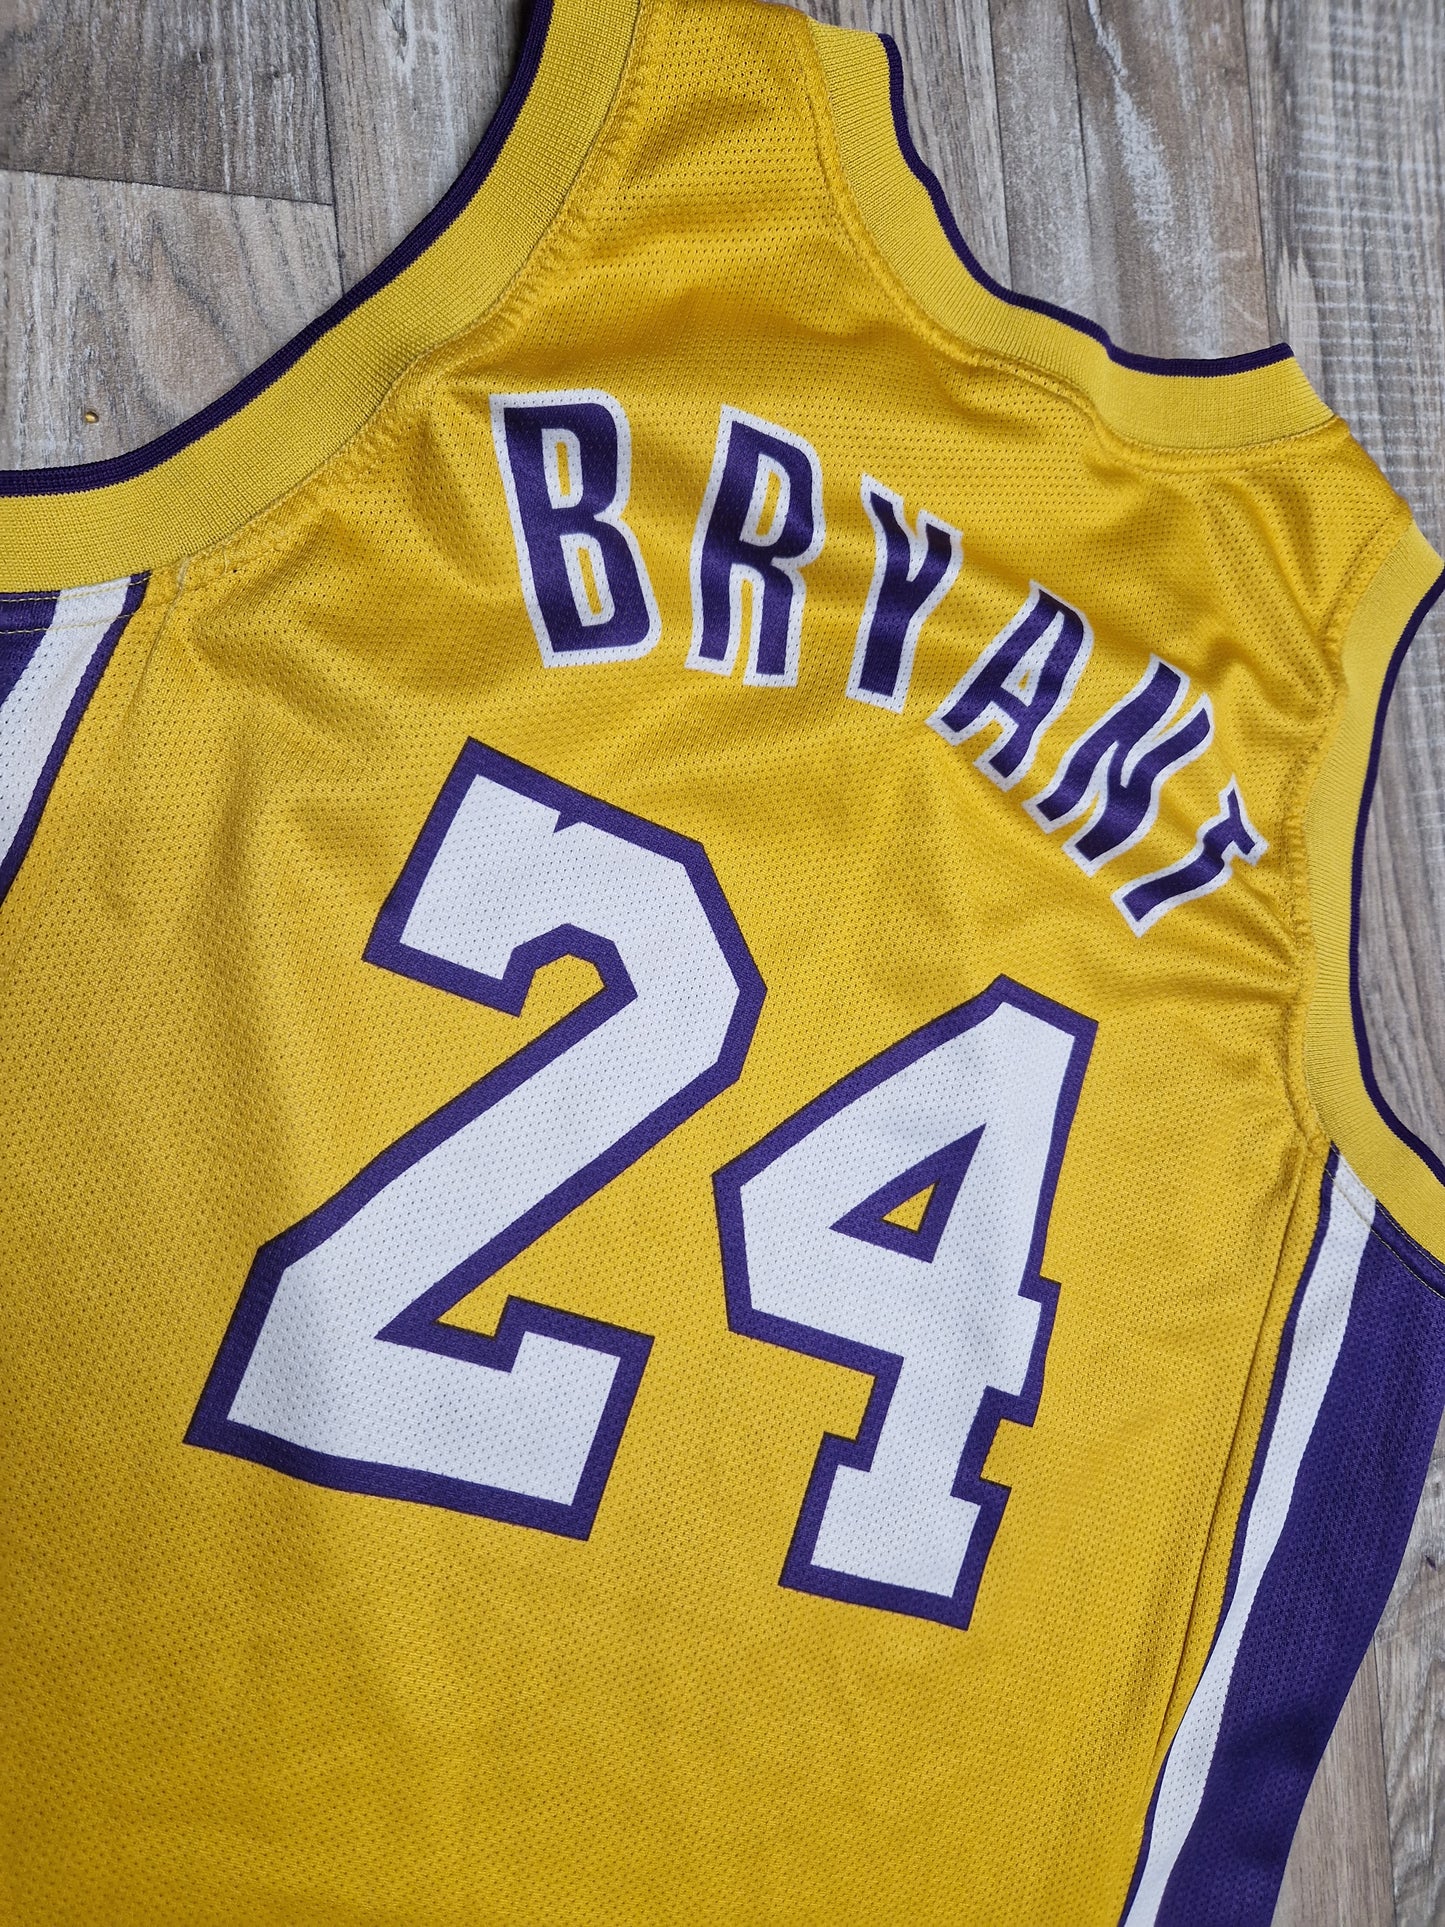 Kobe Bryant Los Angeles Lakers Jersey Size Medium